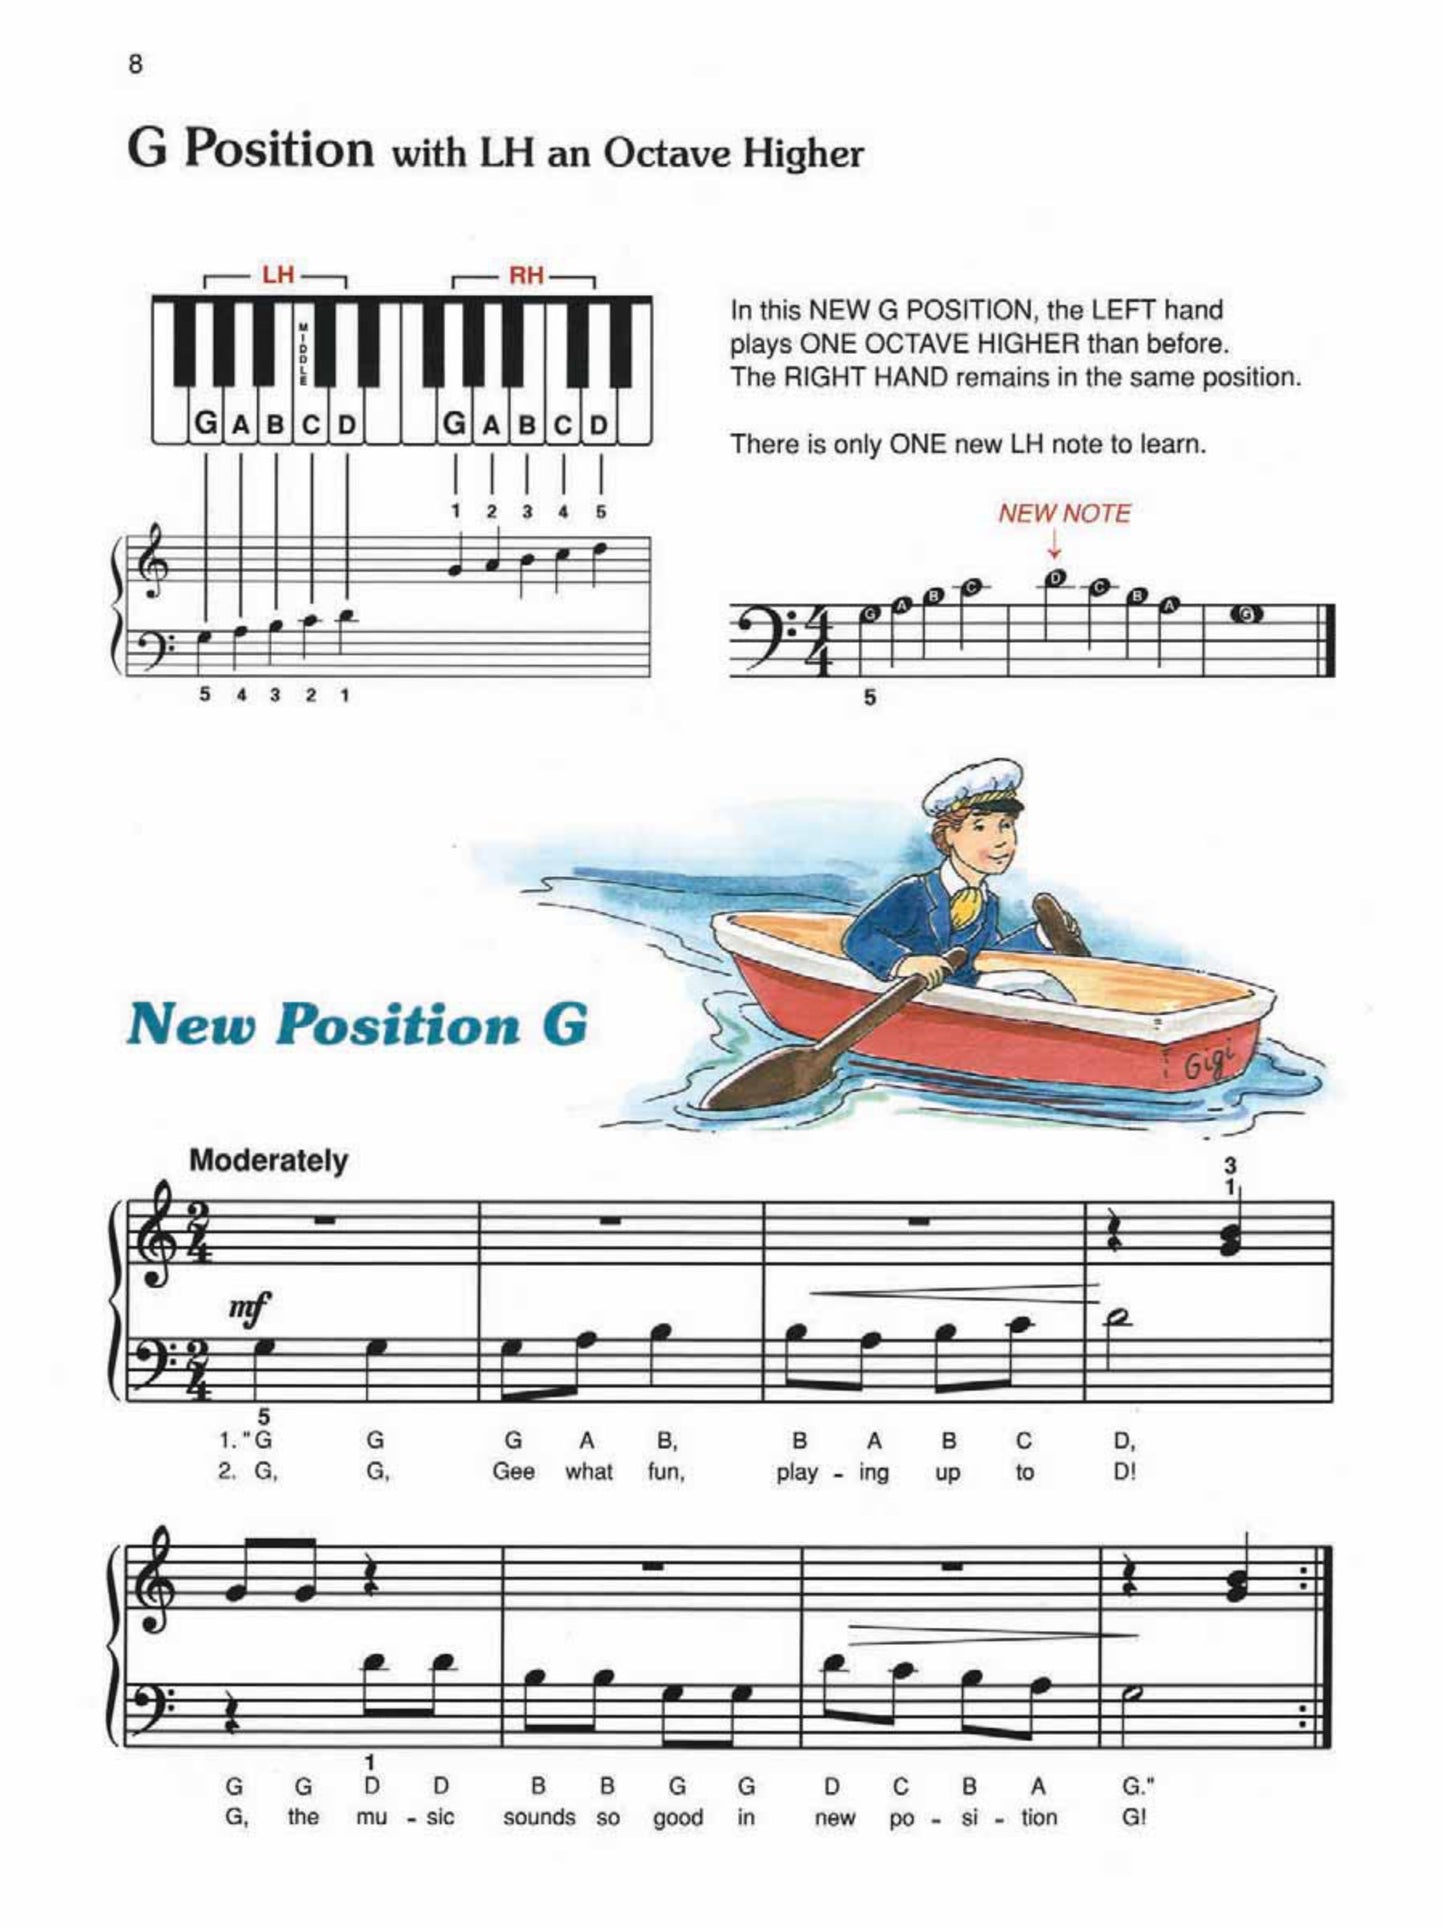 Alfred's Basic Piano Prep Course - Lesson Level D Book